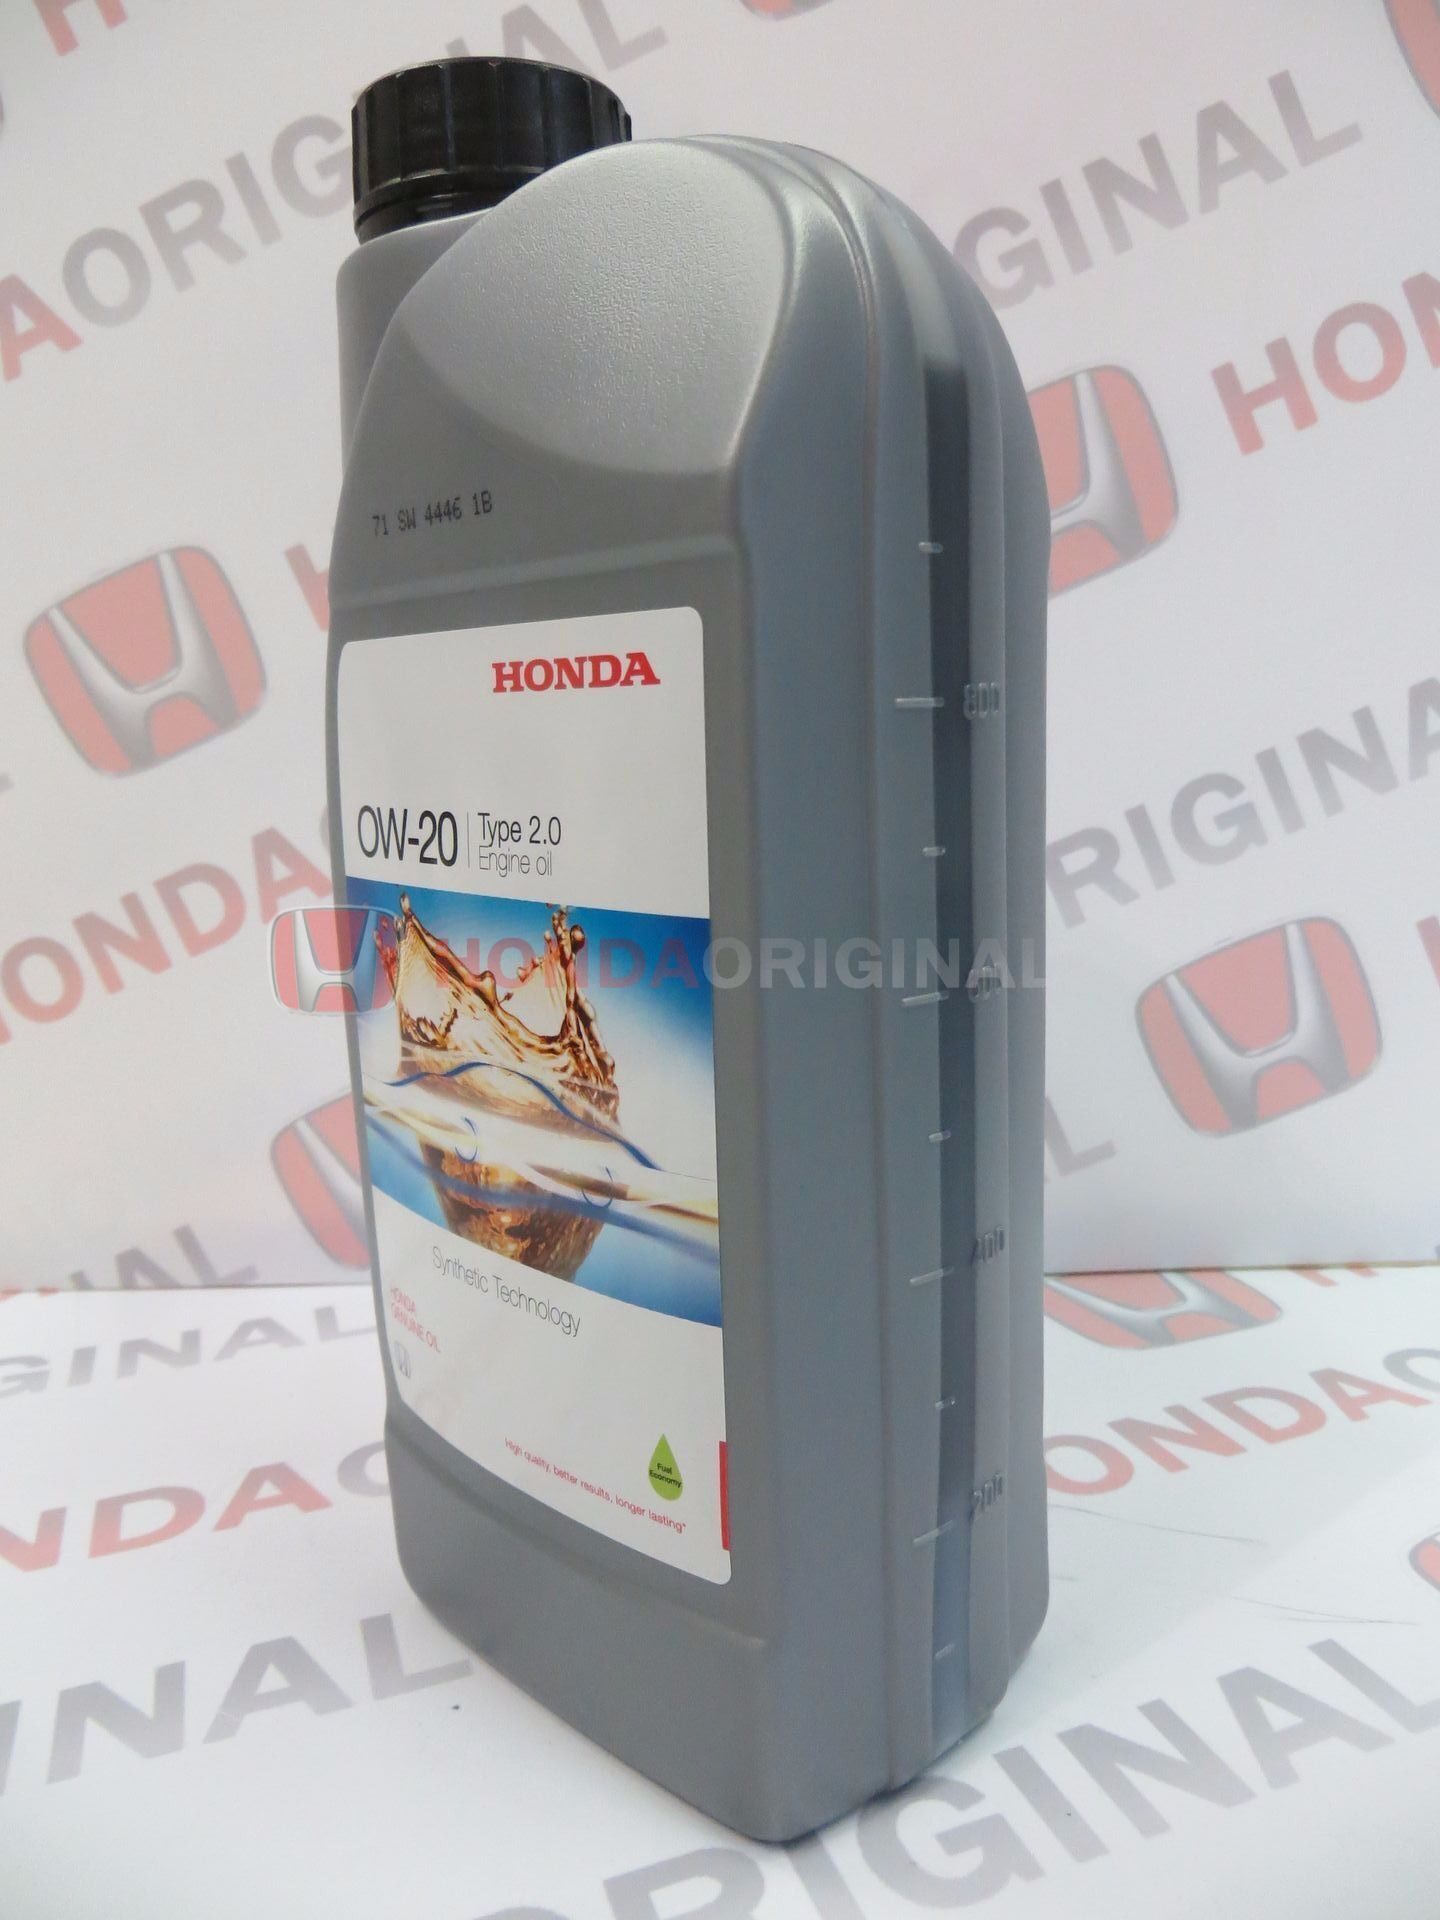 Масло Хонда 0w20. Моторное масло Хонда 0w20. Масло Honda 0w20 Hybrid. Honda 1 литр масло.